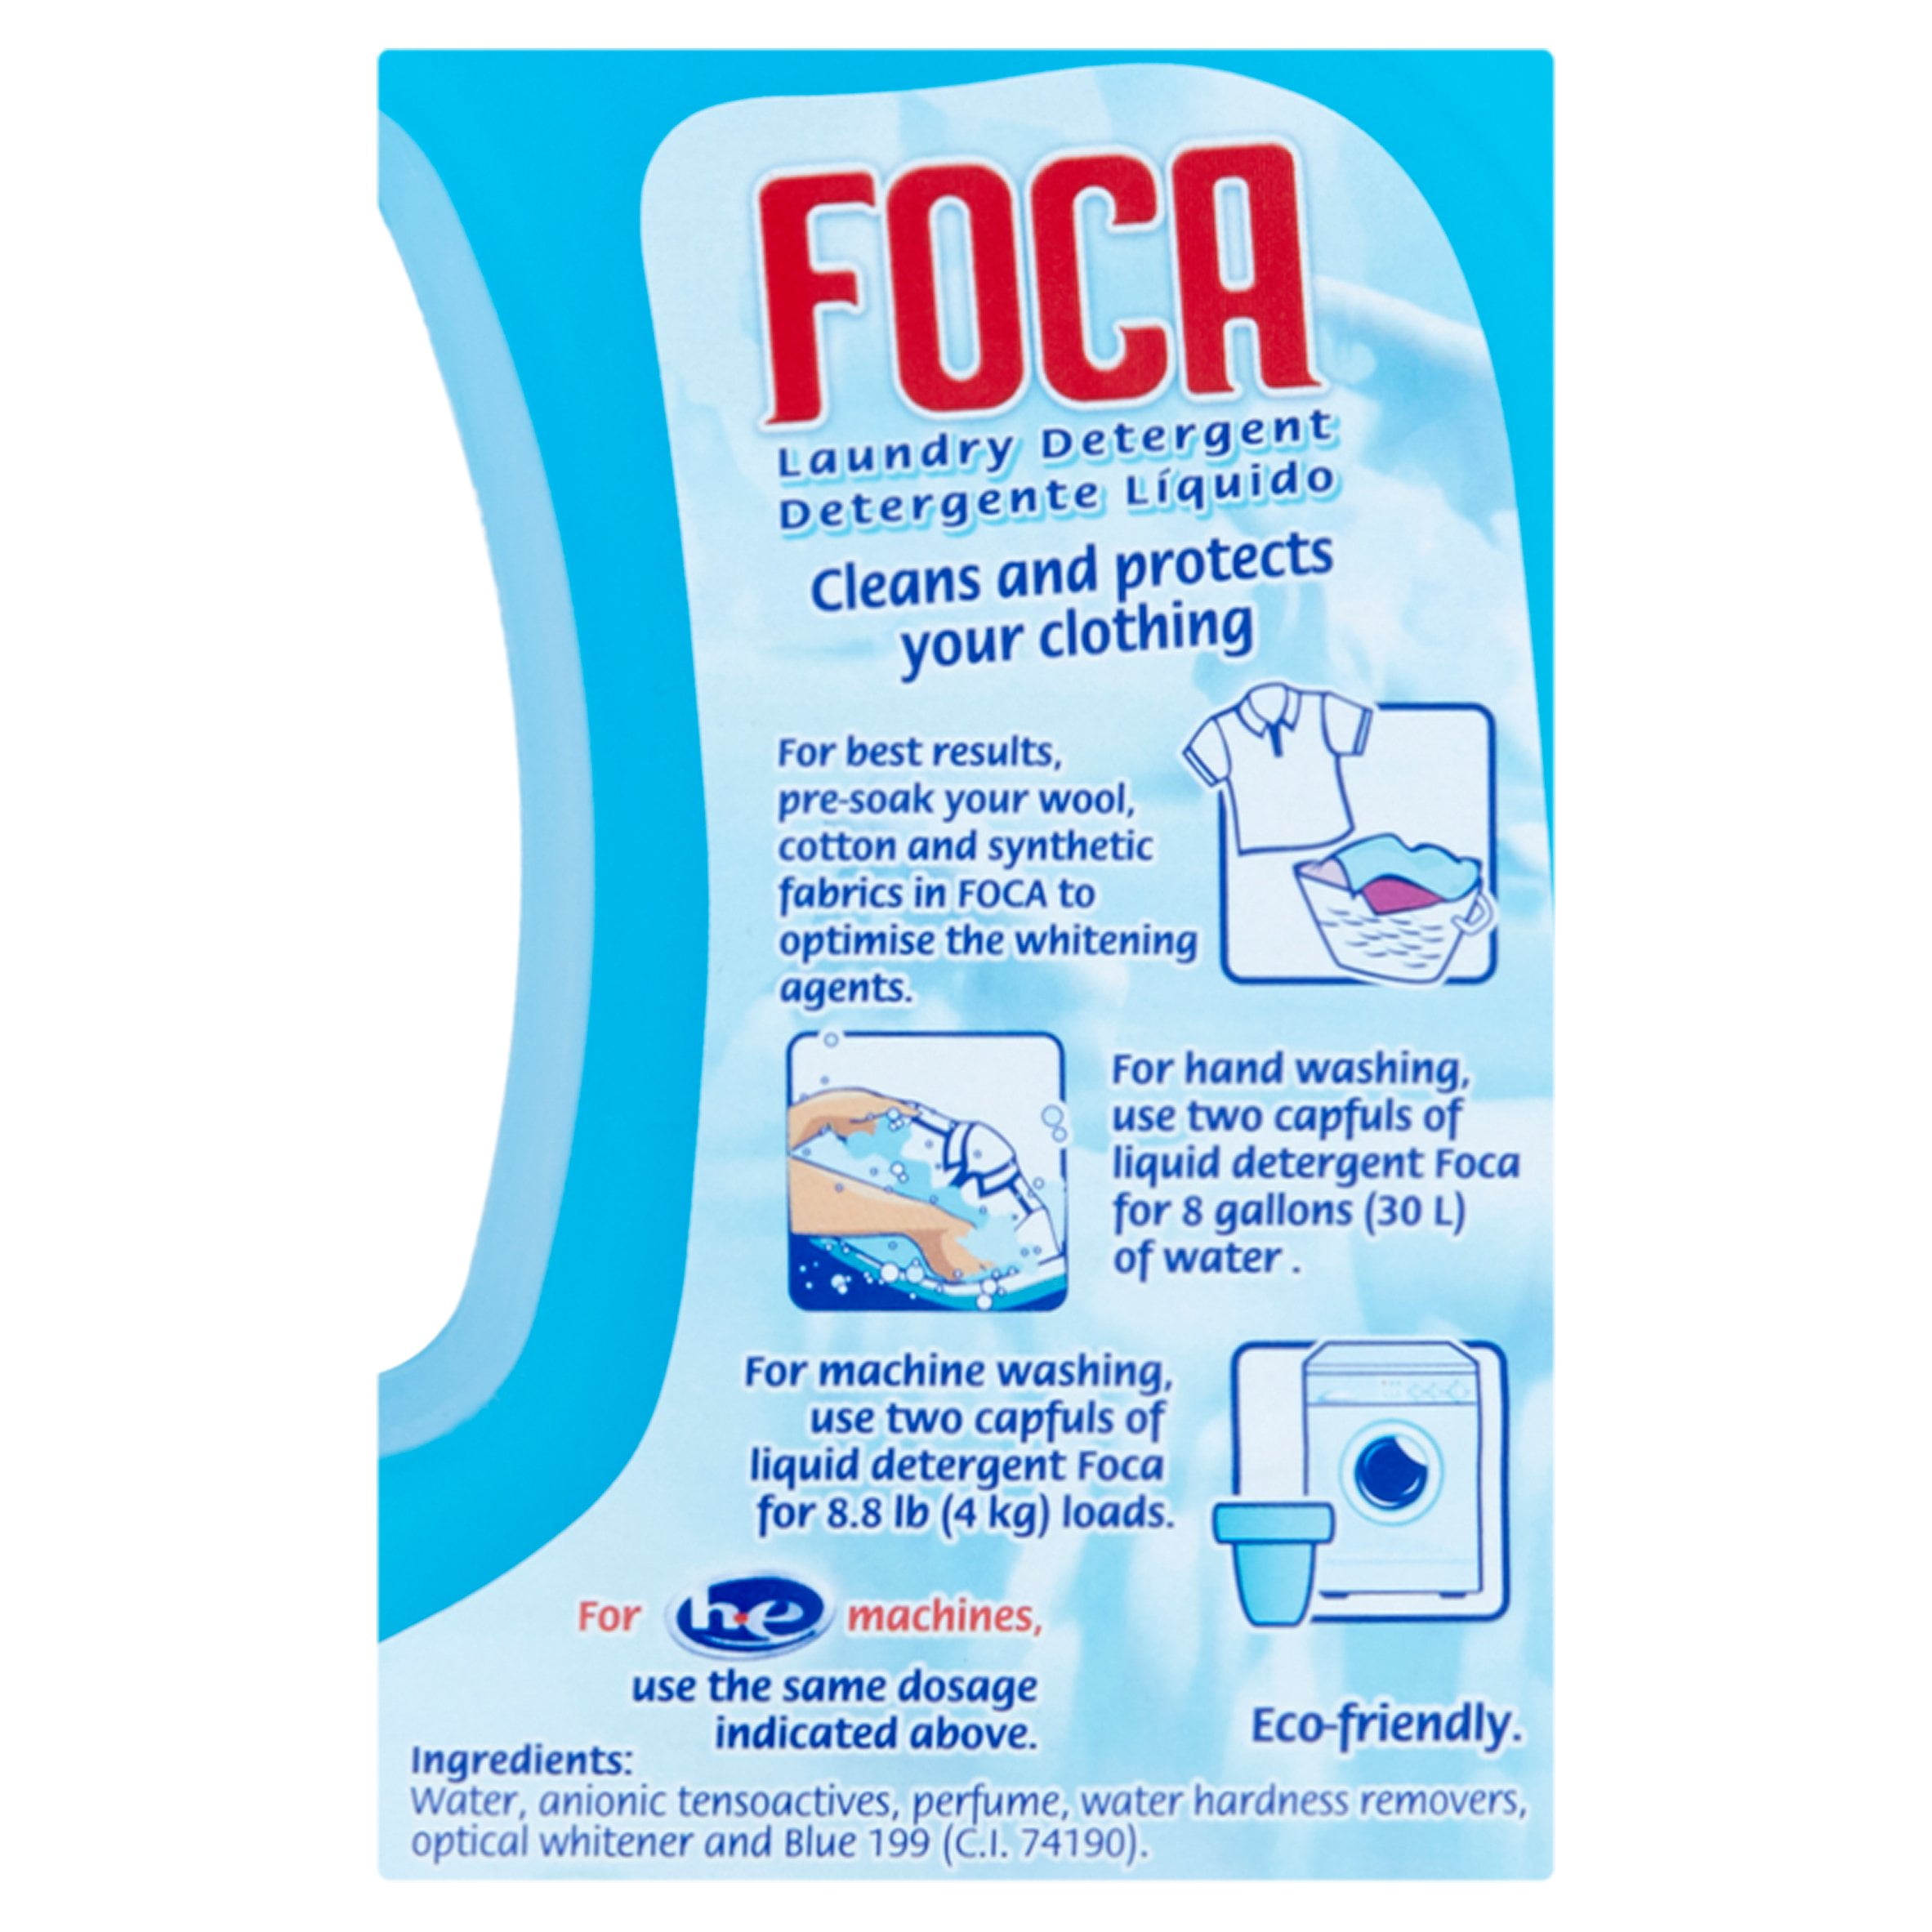 Foca Laundry Detergent 33 81 Fl Oz Walmart Com Walmart Com,2 Player Two Player Card Games